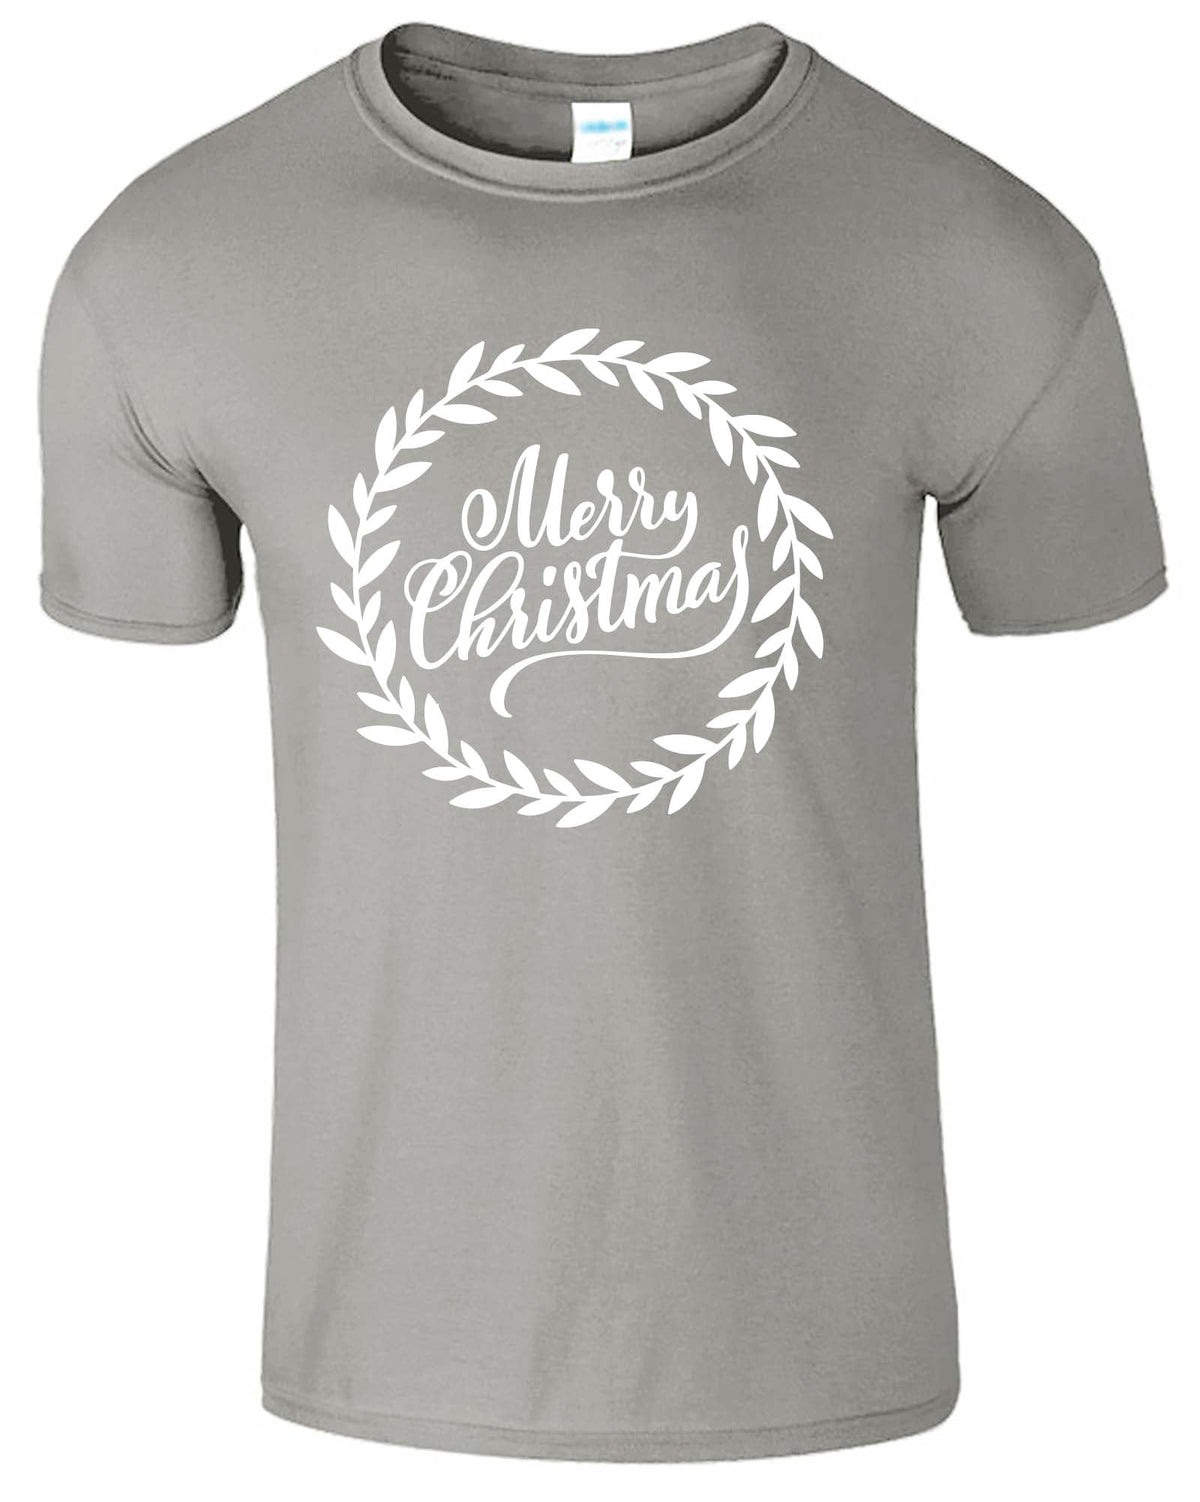 Merry Christmas Sarcastic Humor Gift Men's T-Shirt